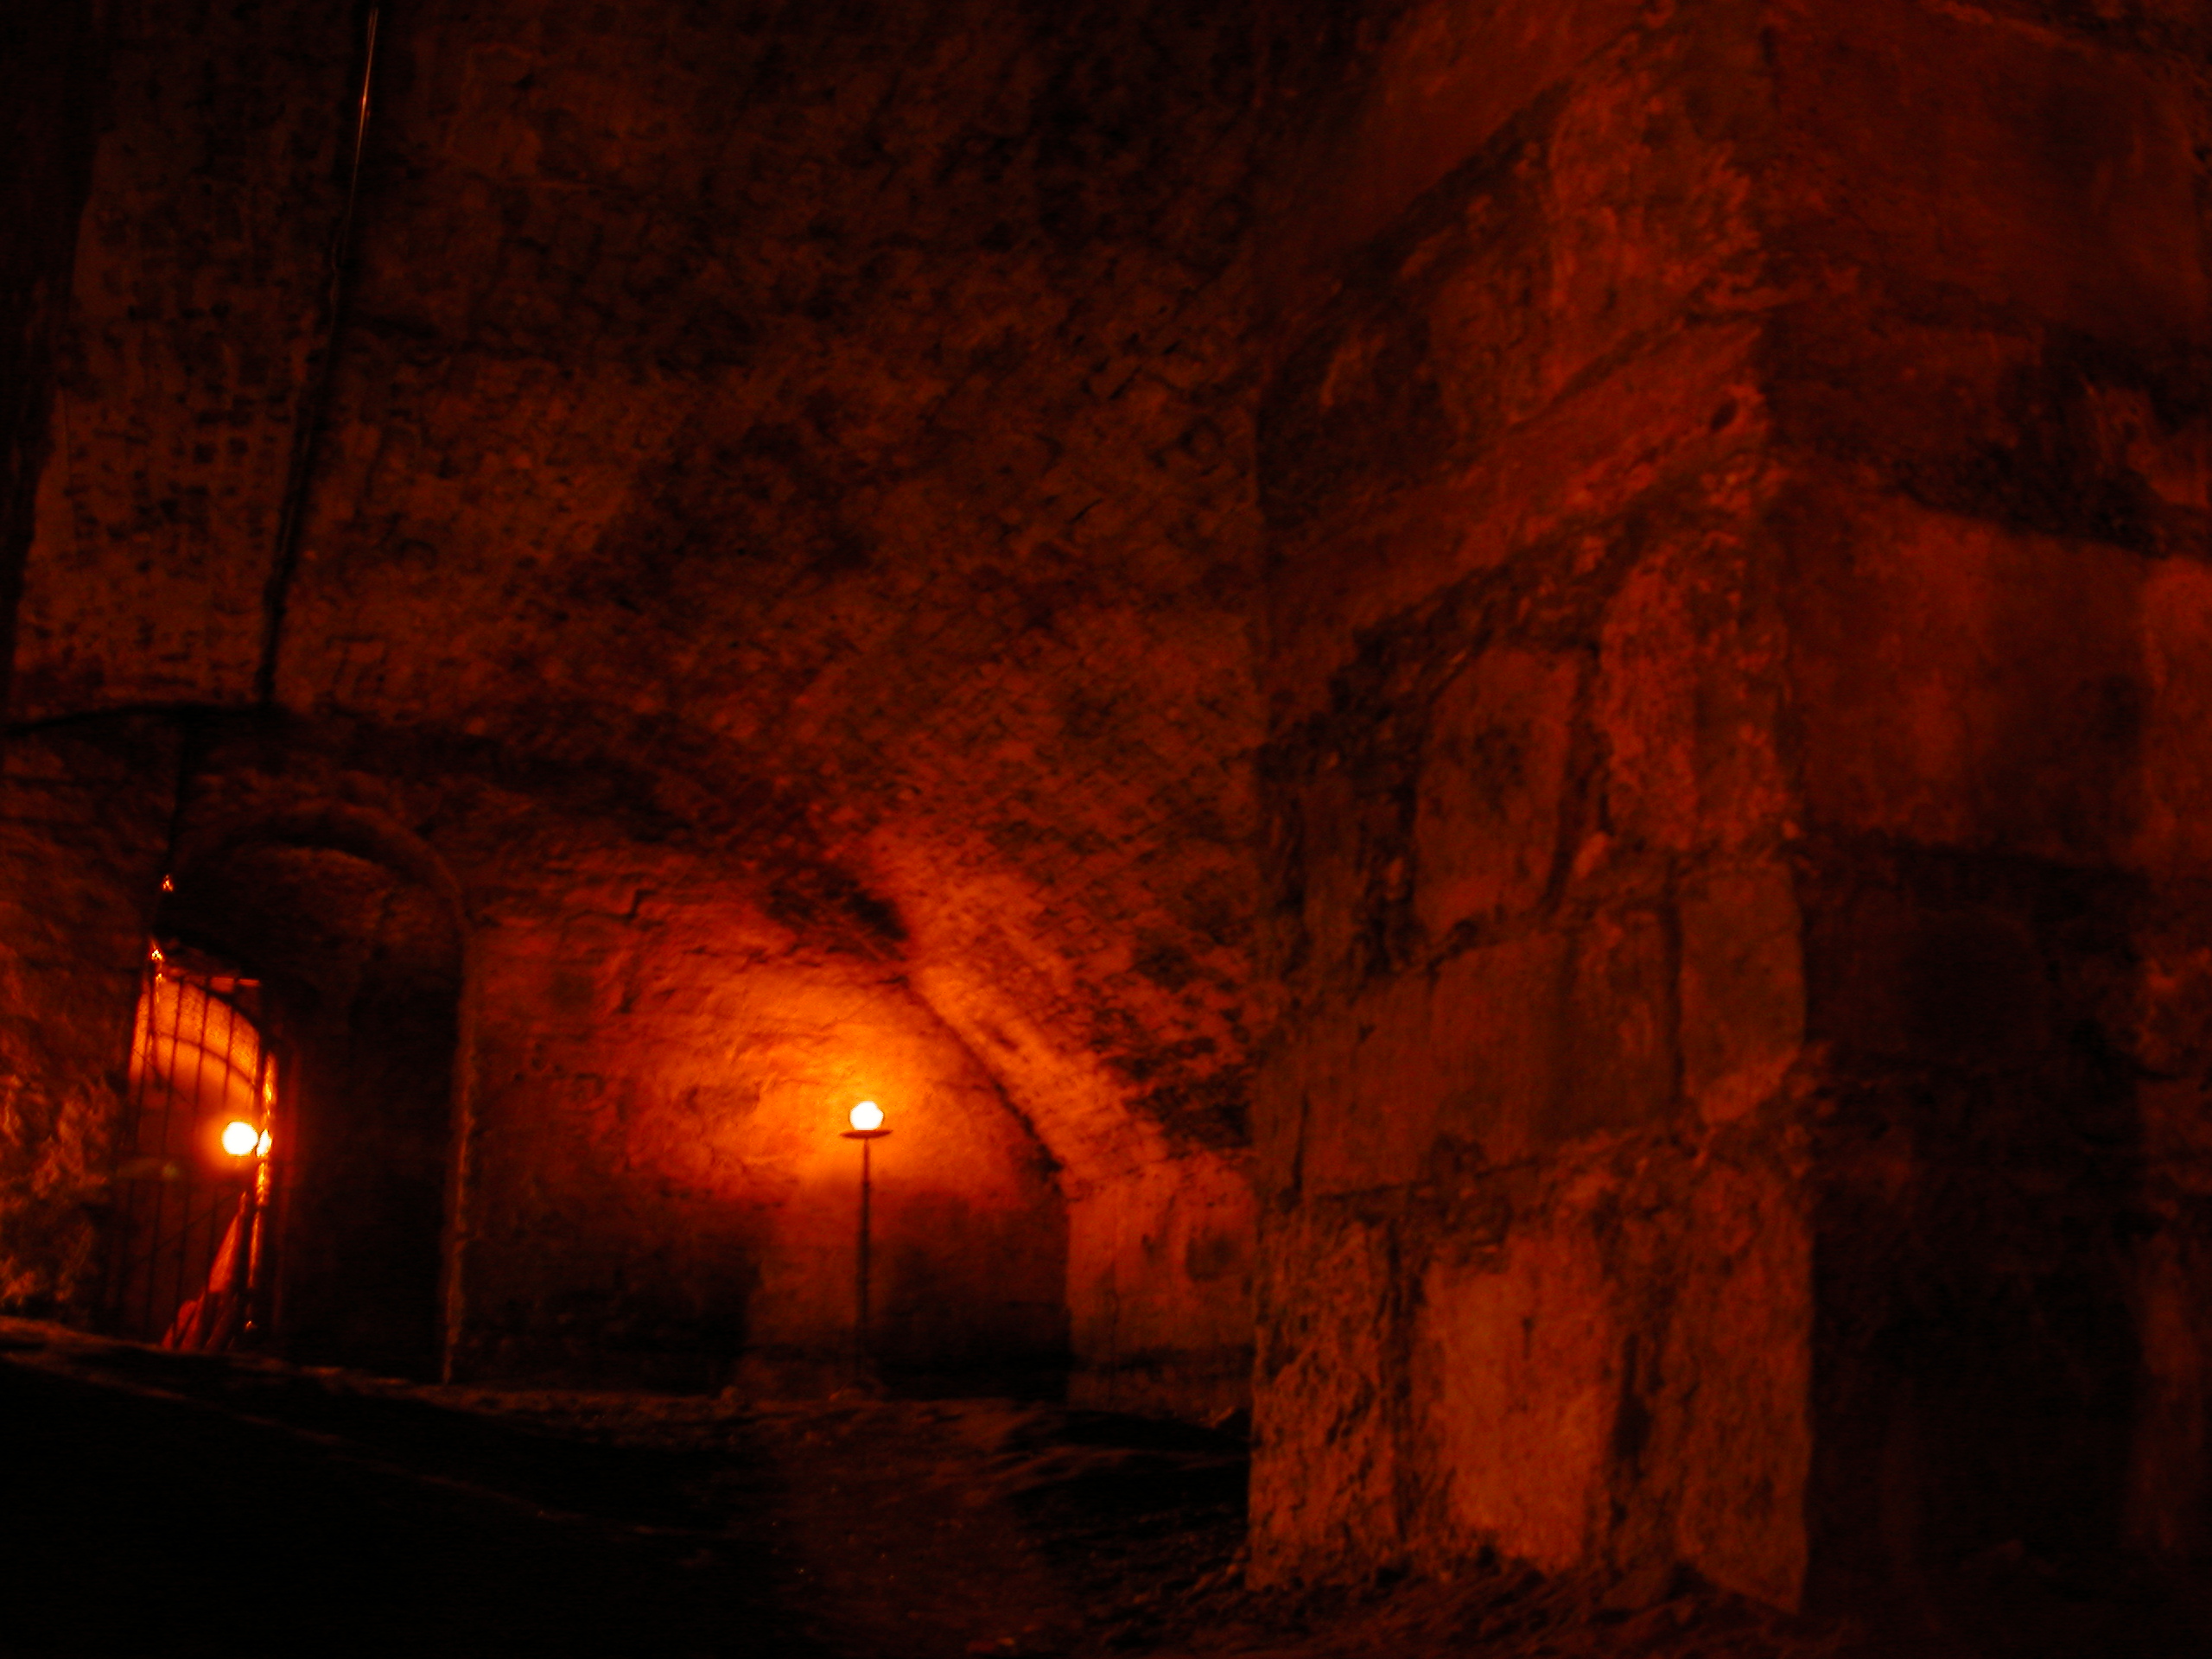 architecture interiors dungeon cave attic cellar dark arch